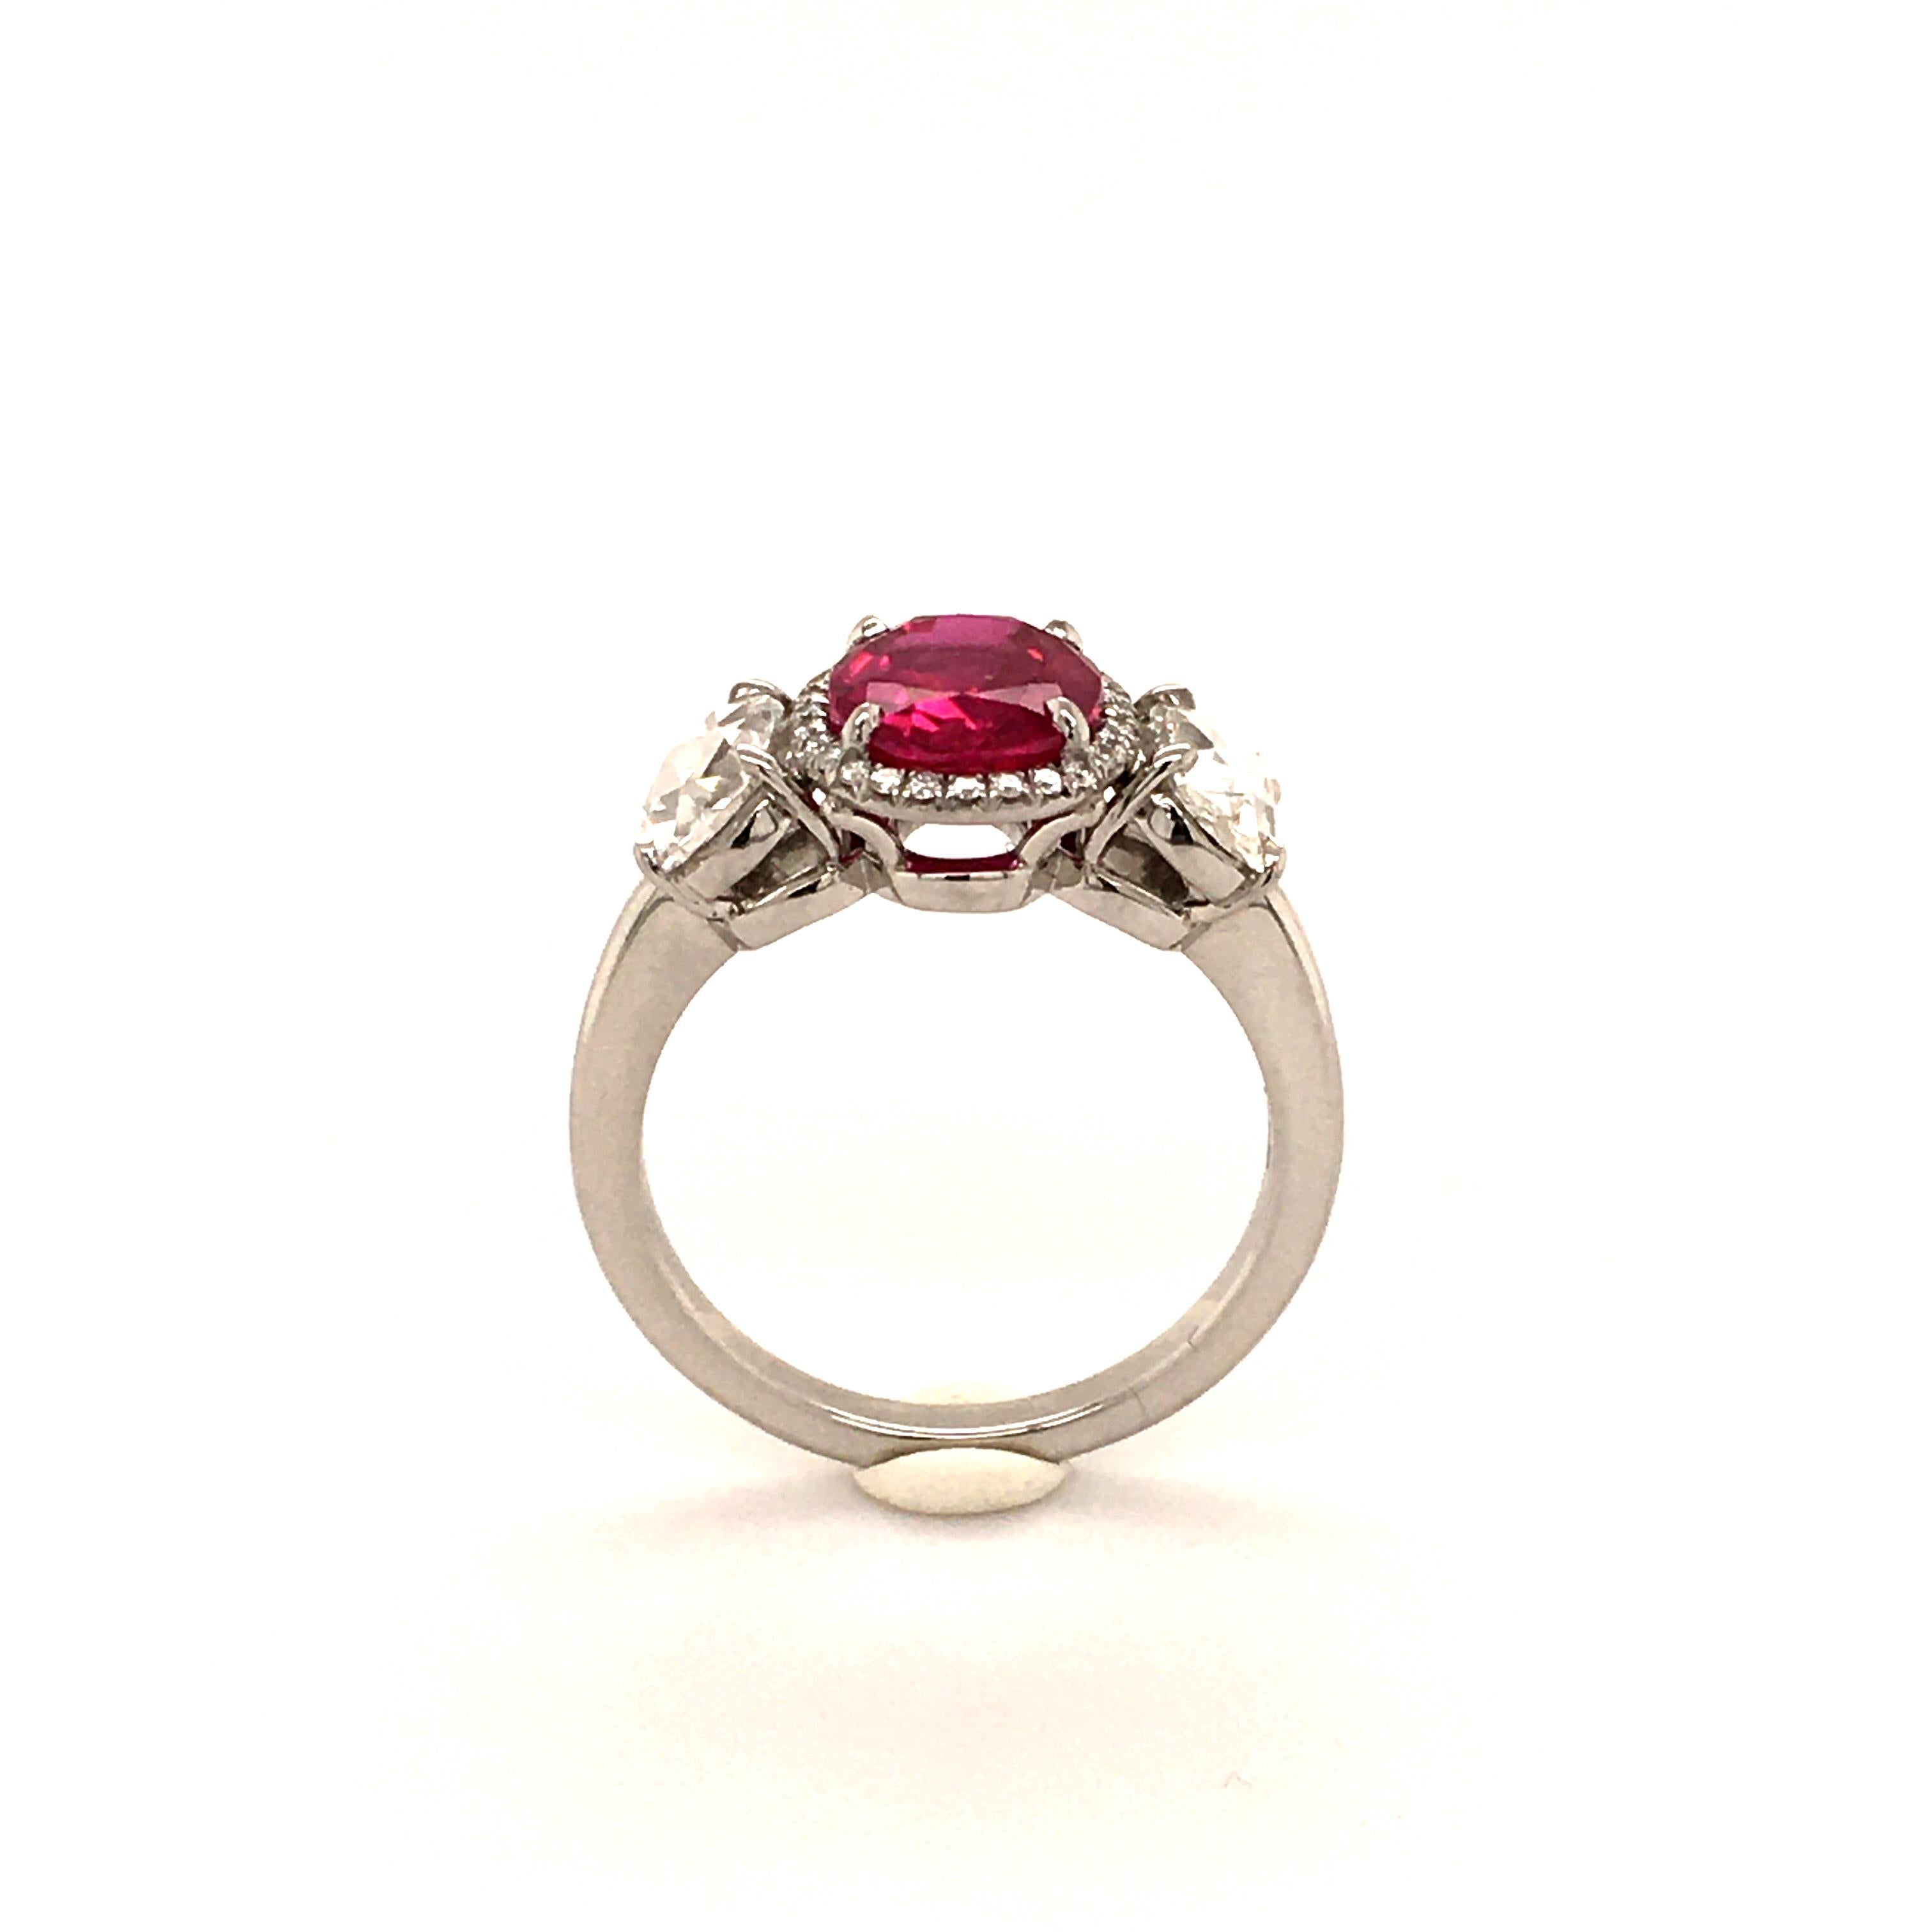 Superb 2.73 Carat Burma Ruby and Diamond Ring in Platinum 950 1